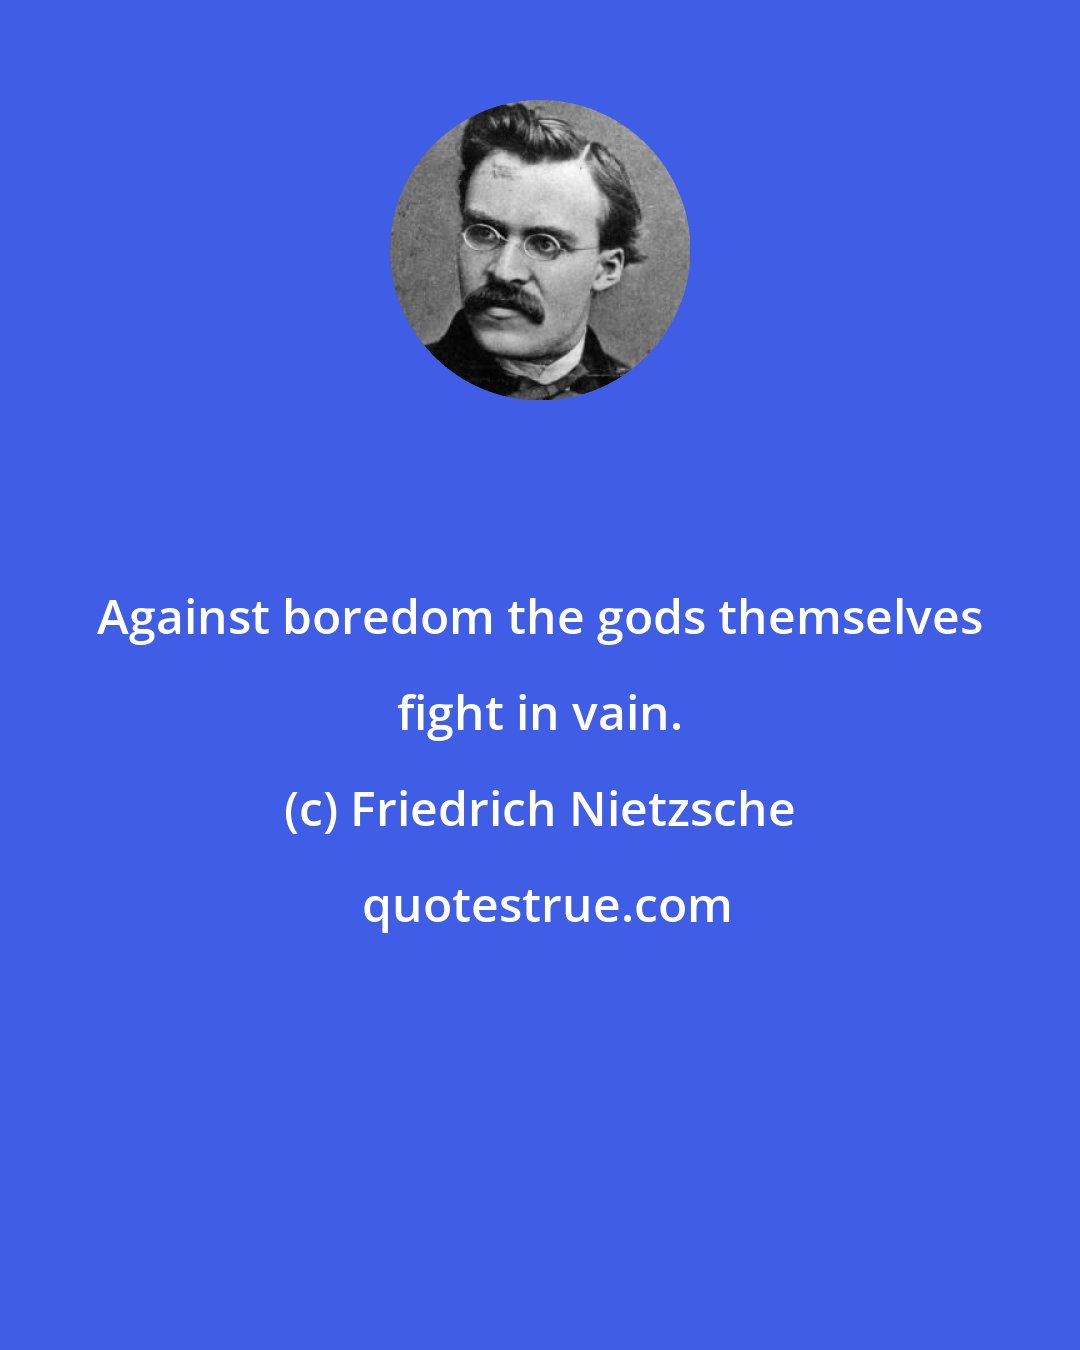 Friedrich Nietzsche: Against boredom the gods themselves fight in vain.